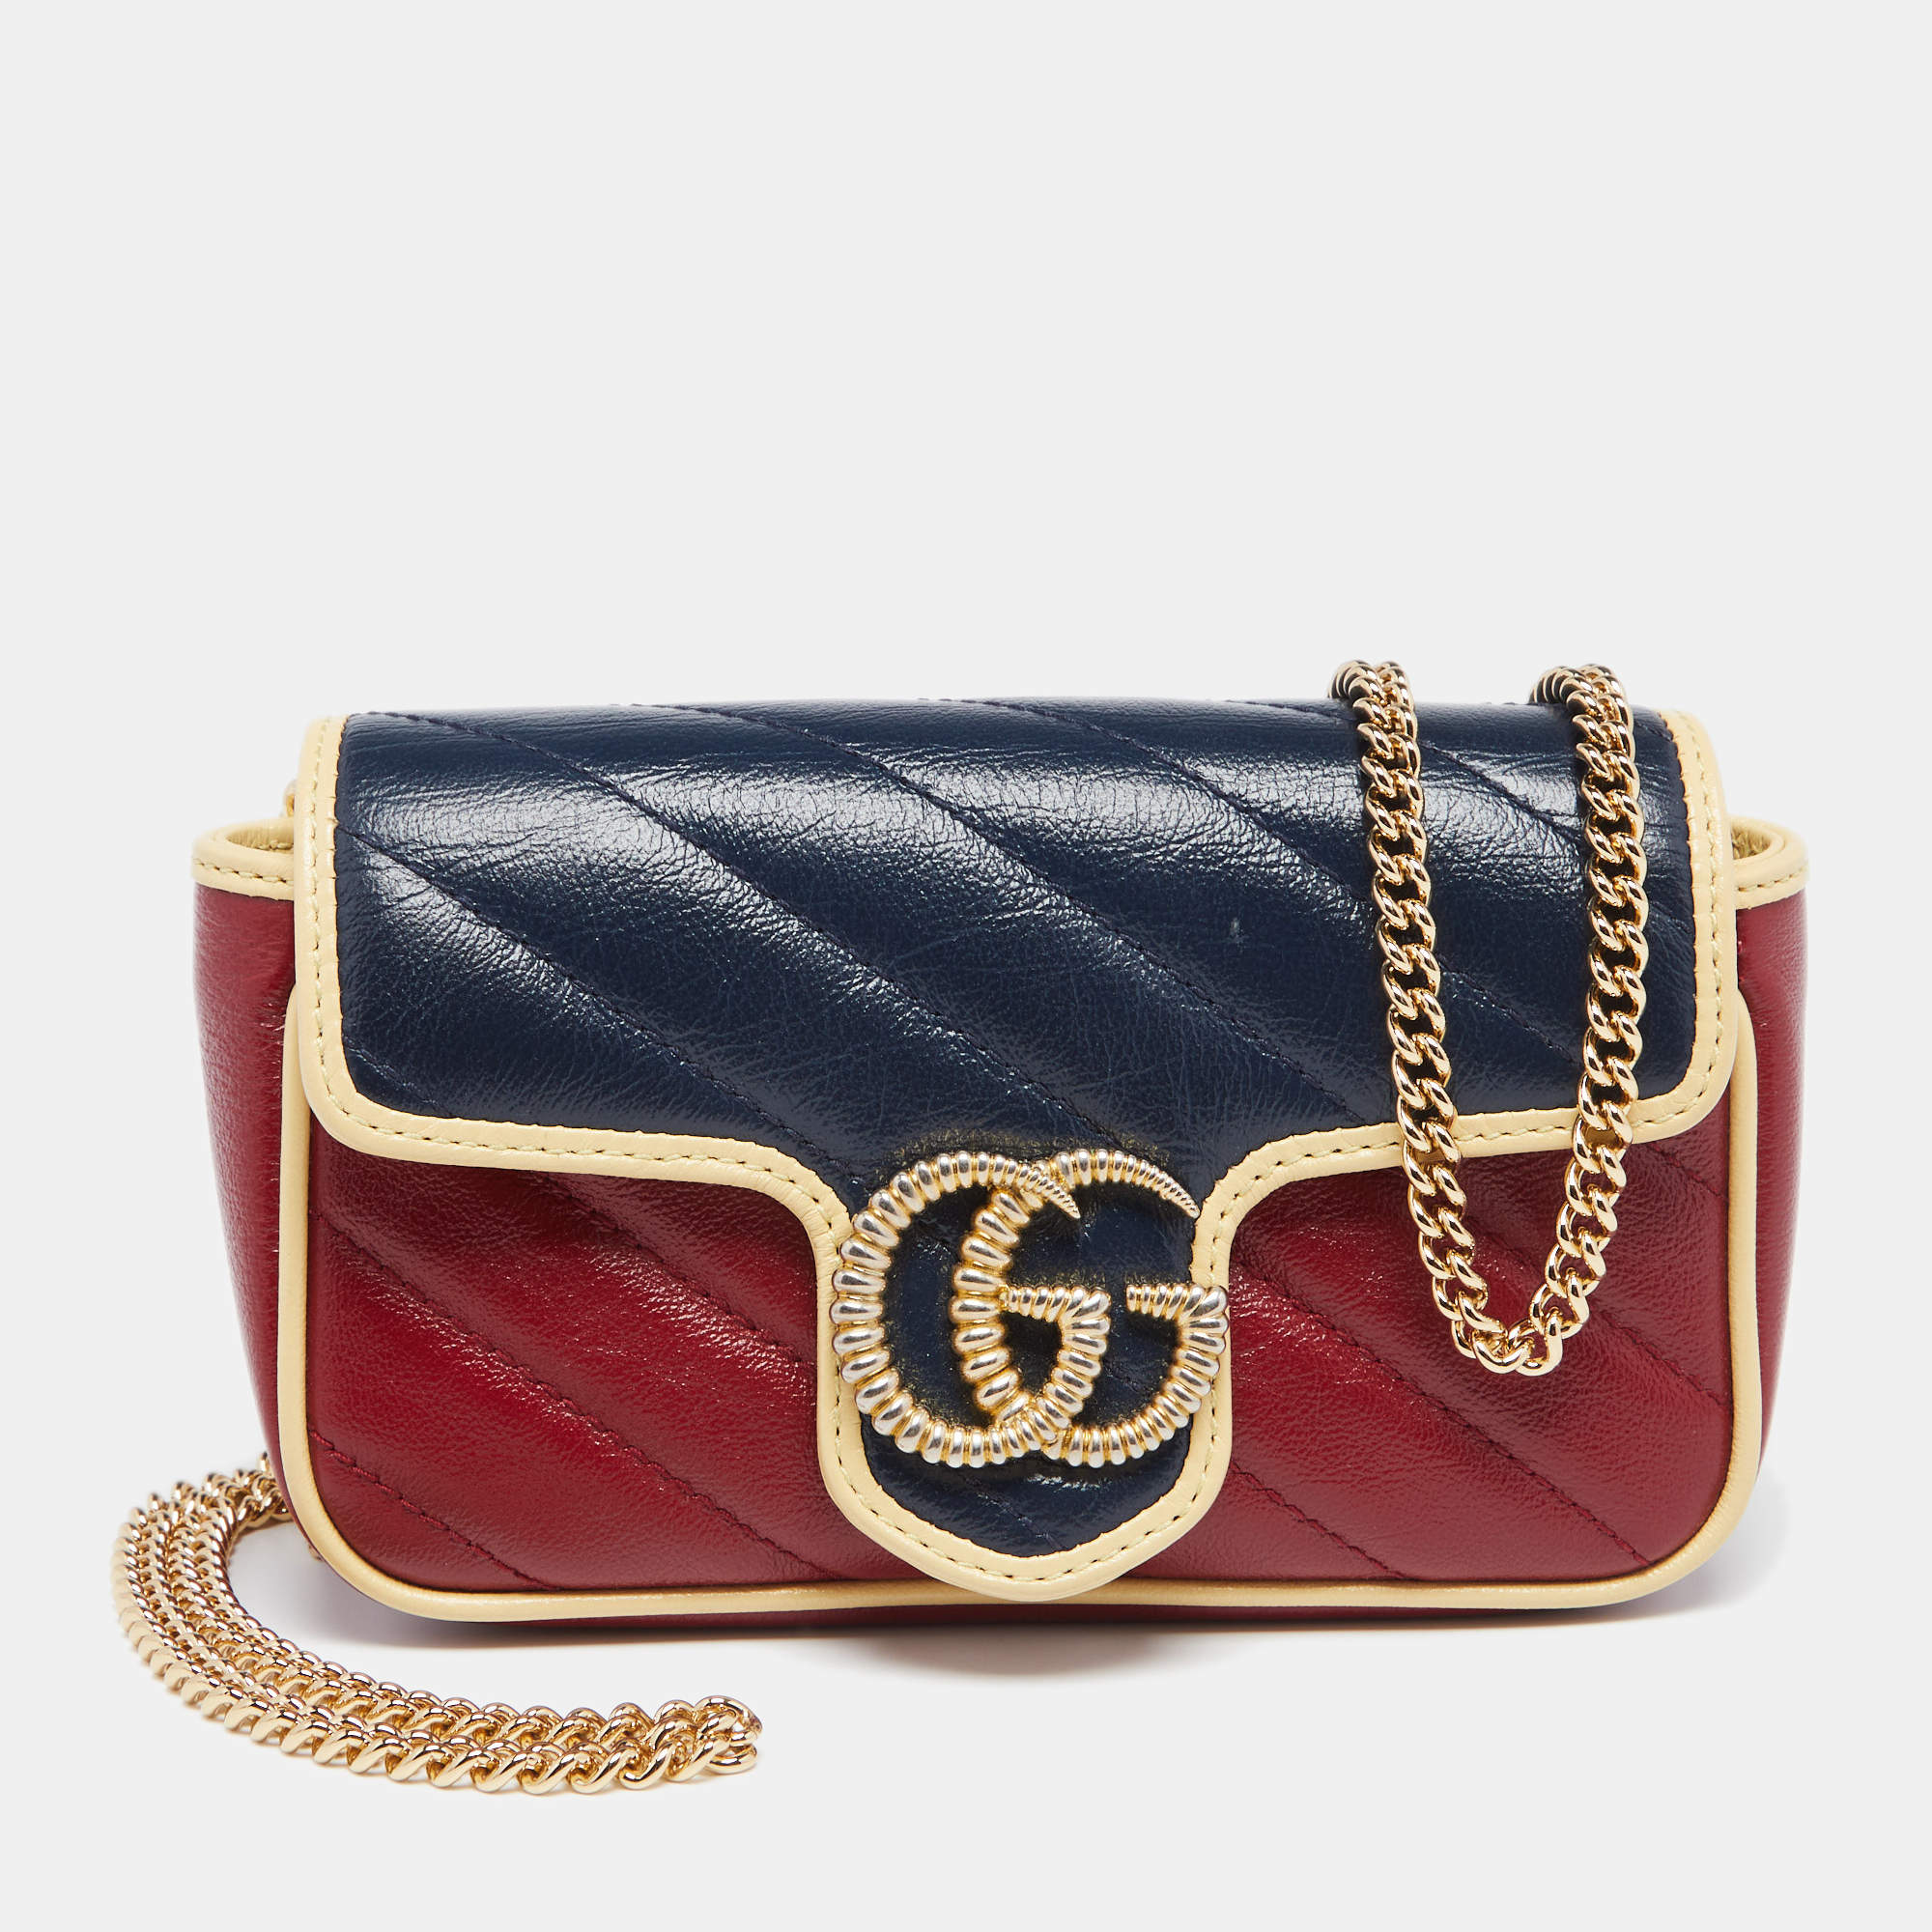 GG Marmont matelassé super mini bag in red leather